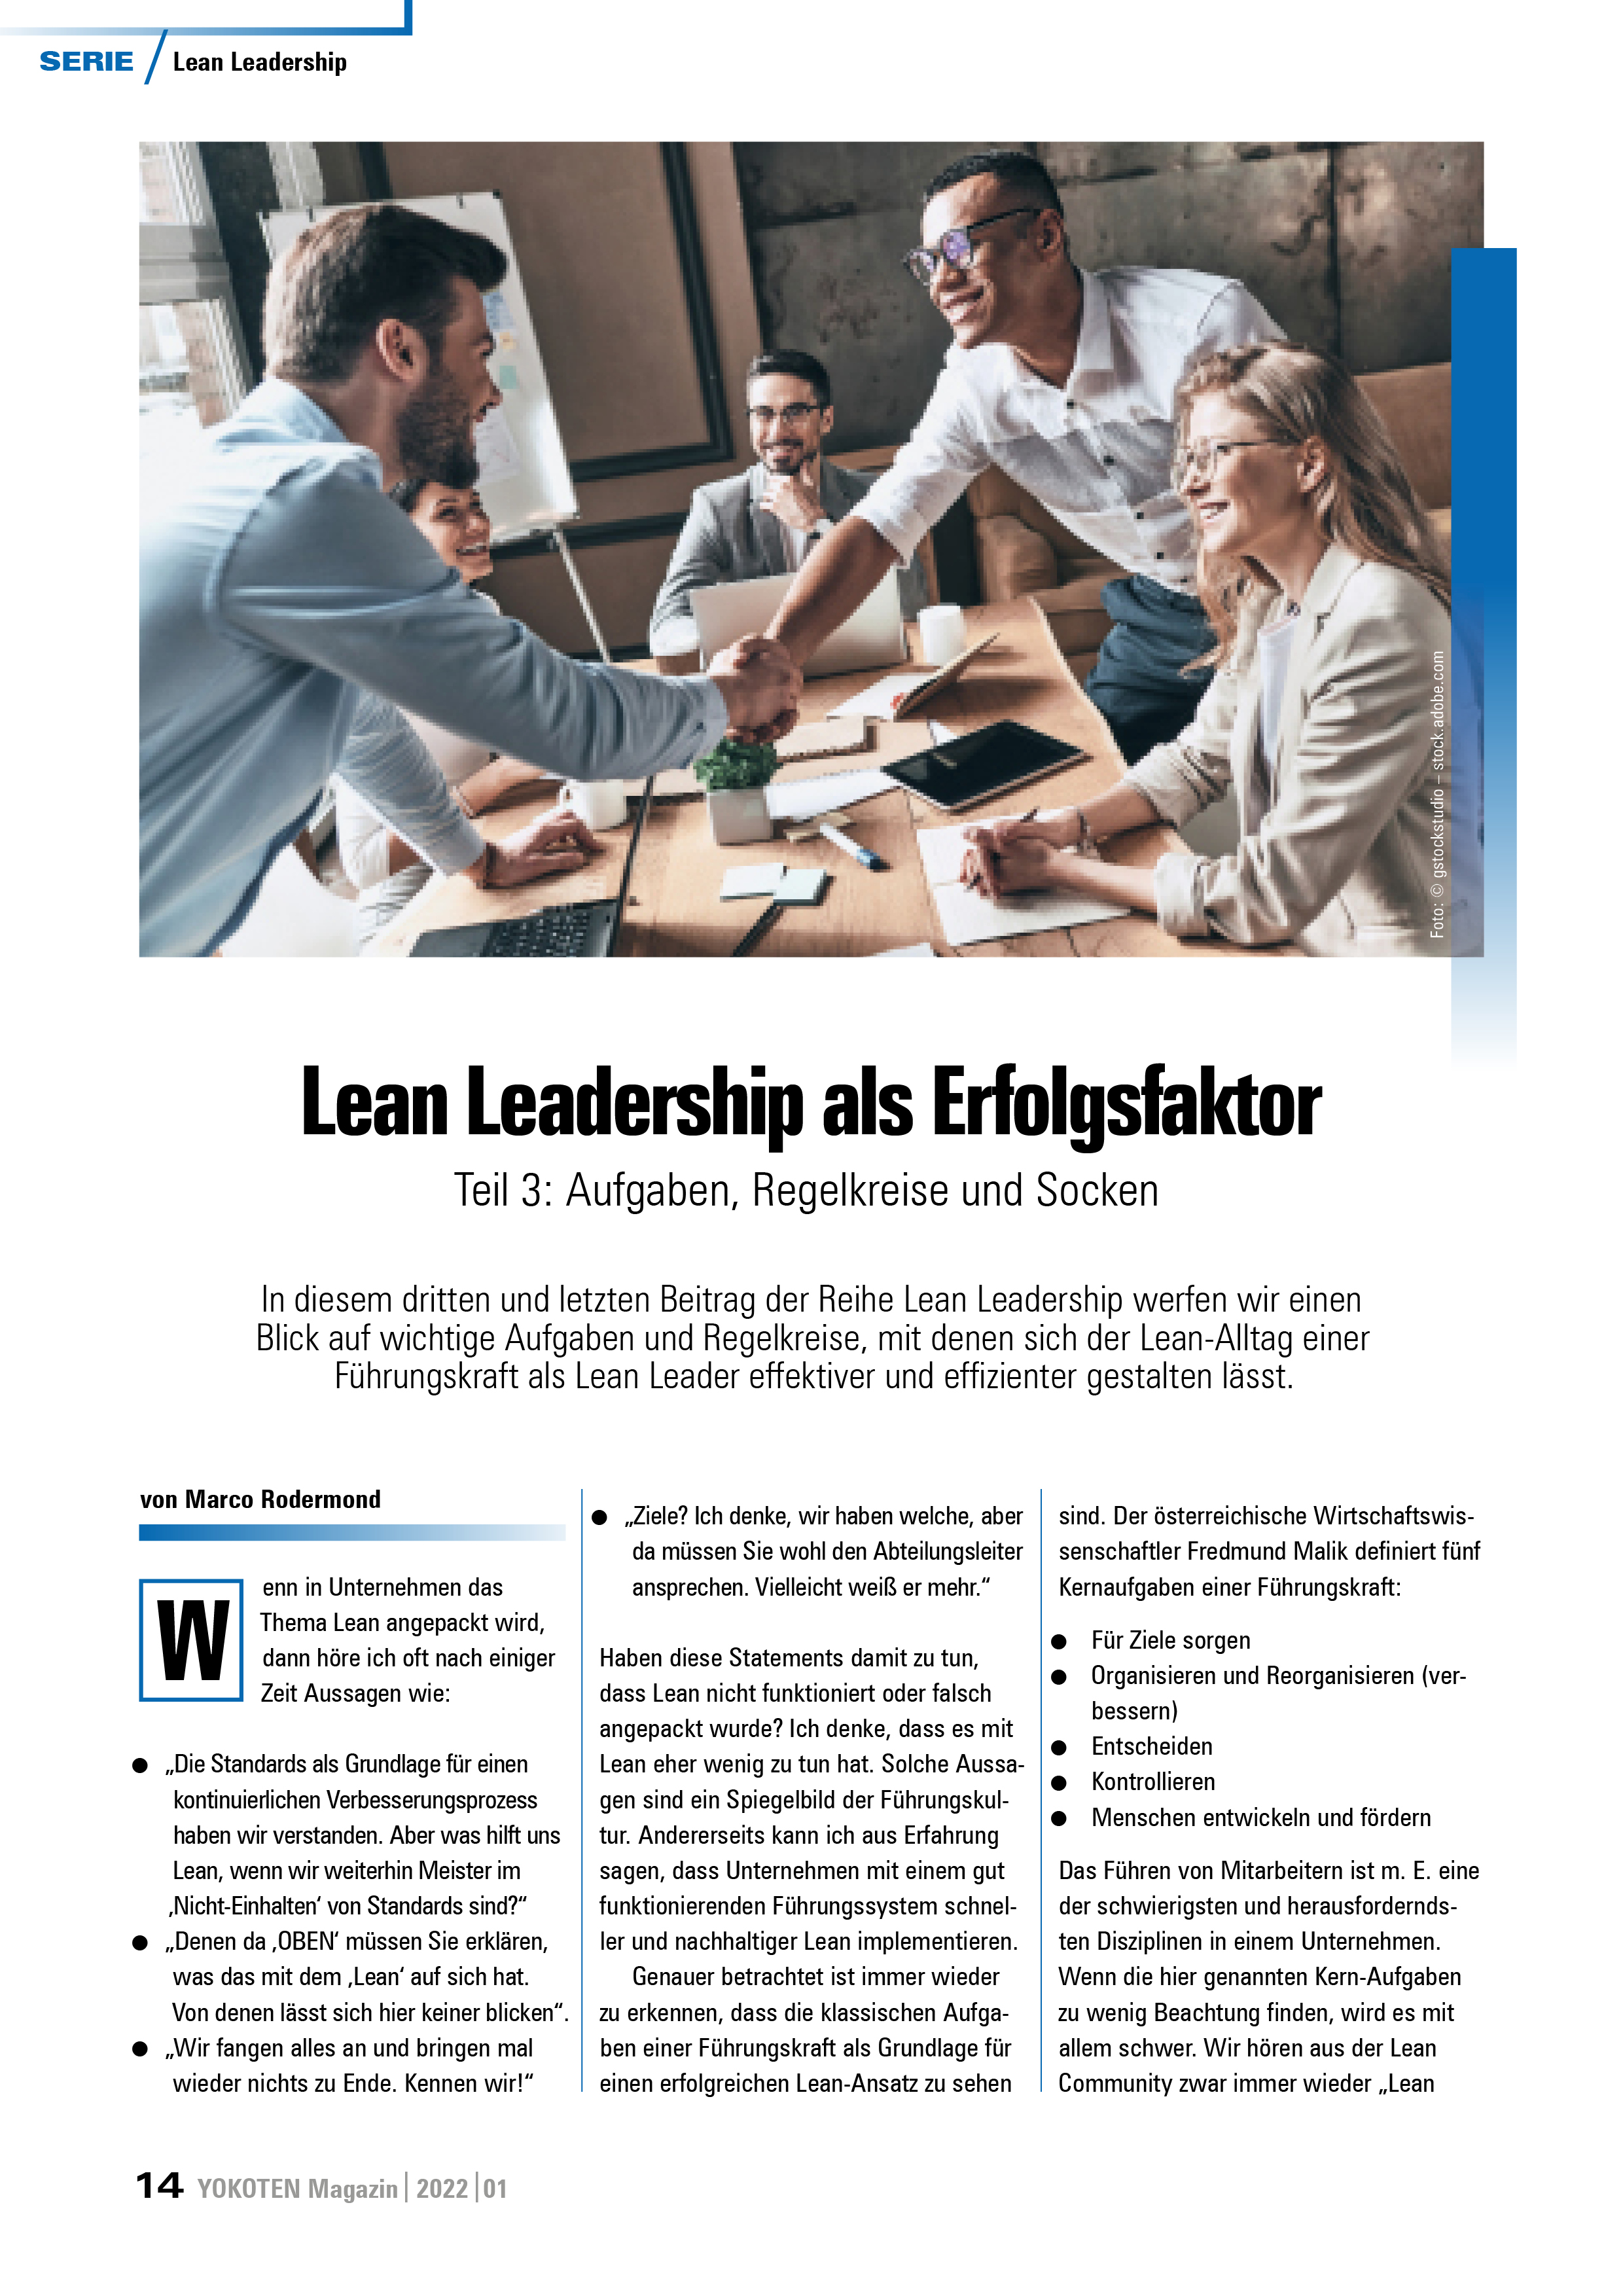 YOKOTEN-Artikel: Lean Leadership als Erfolgsfaktor